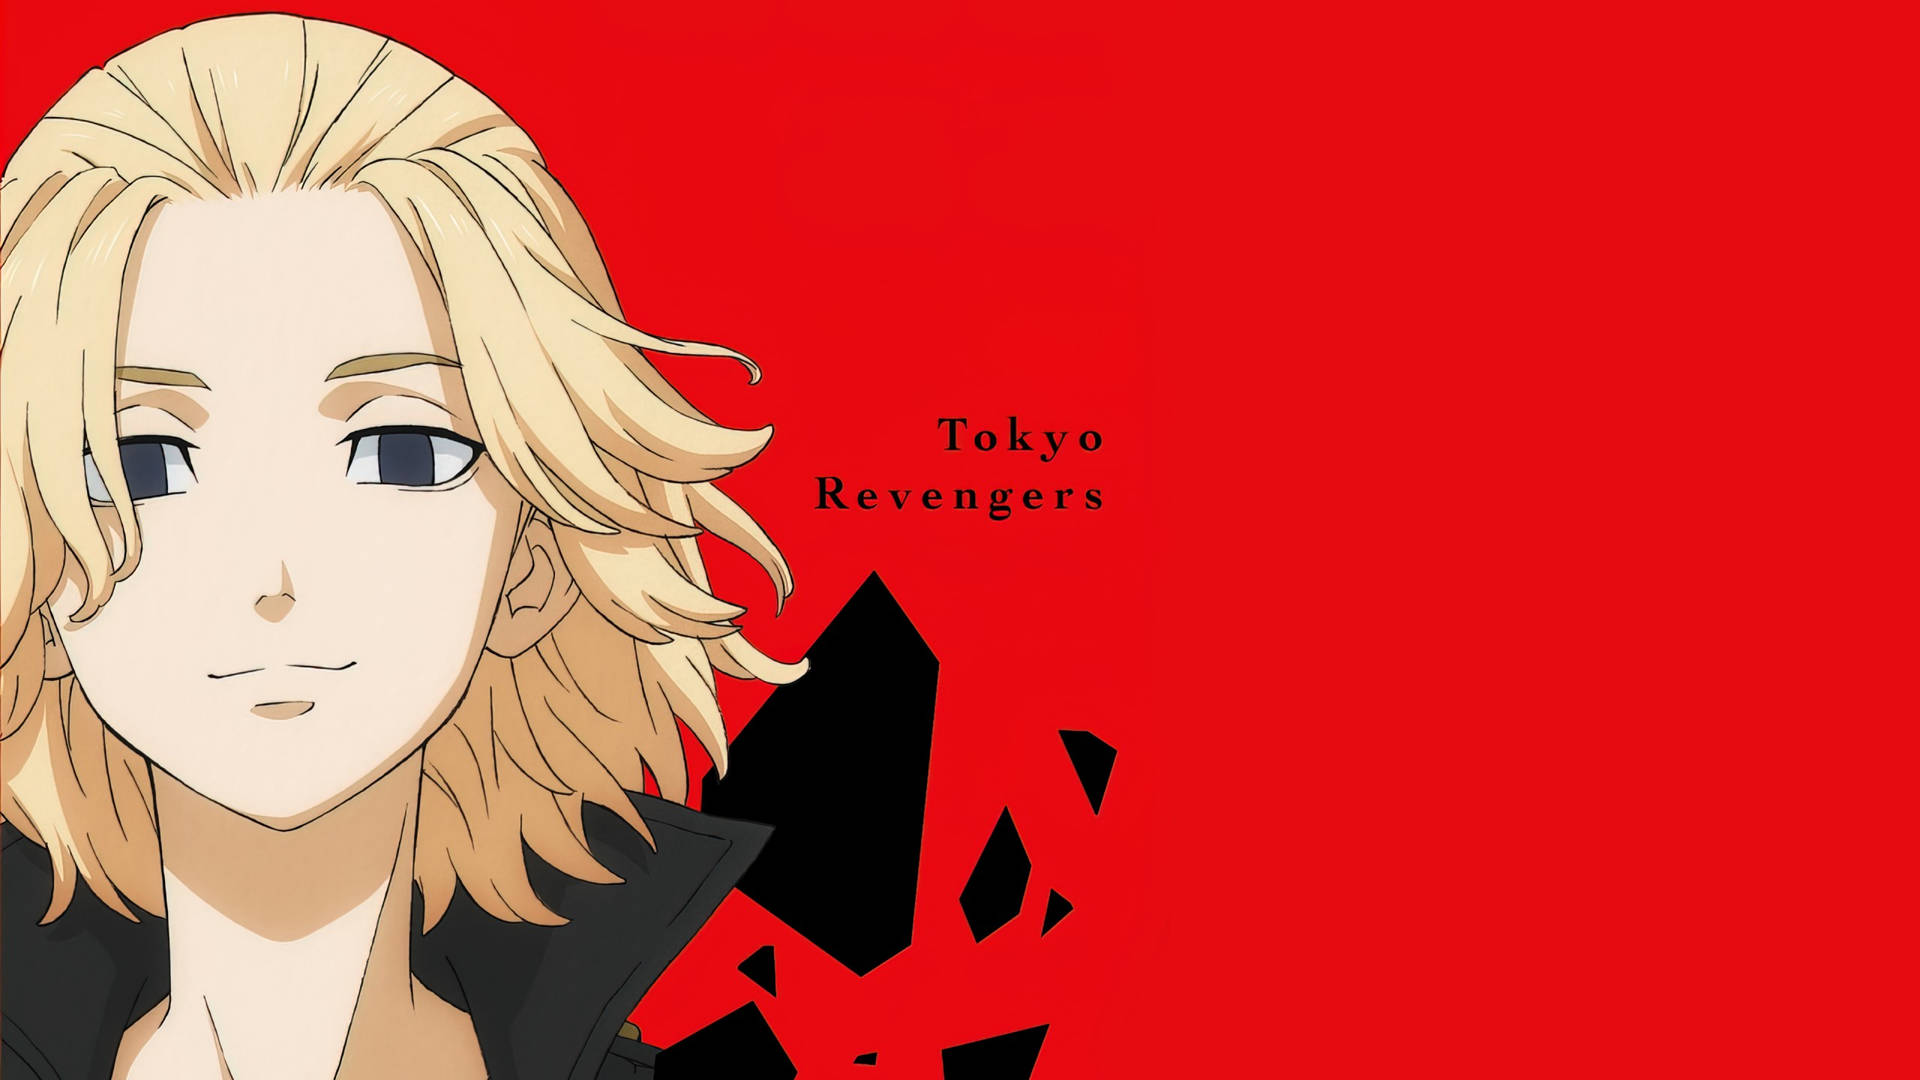 Manjiro From Tokyo Revengers Manga On Red Background Wallpaper